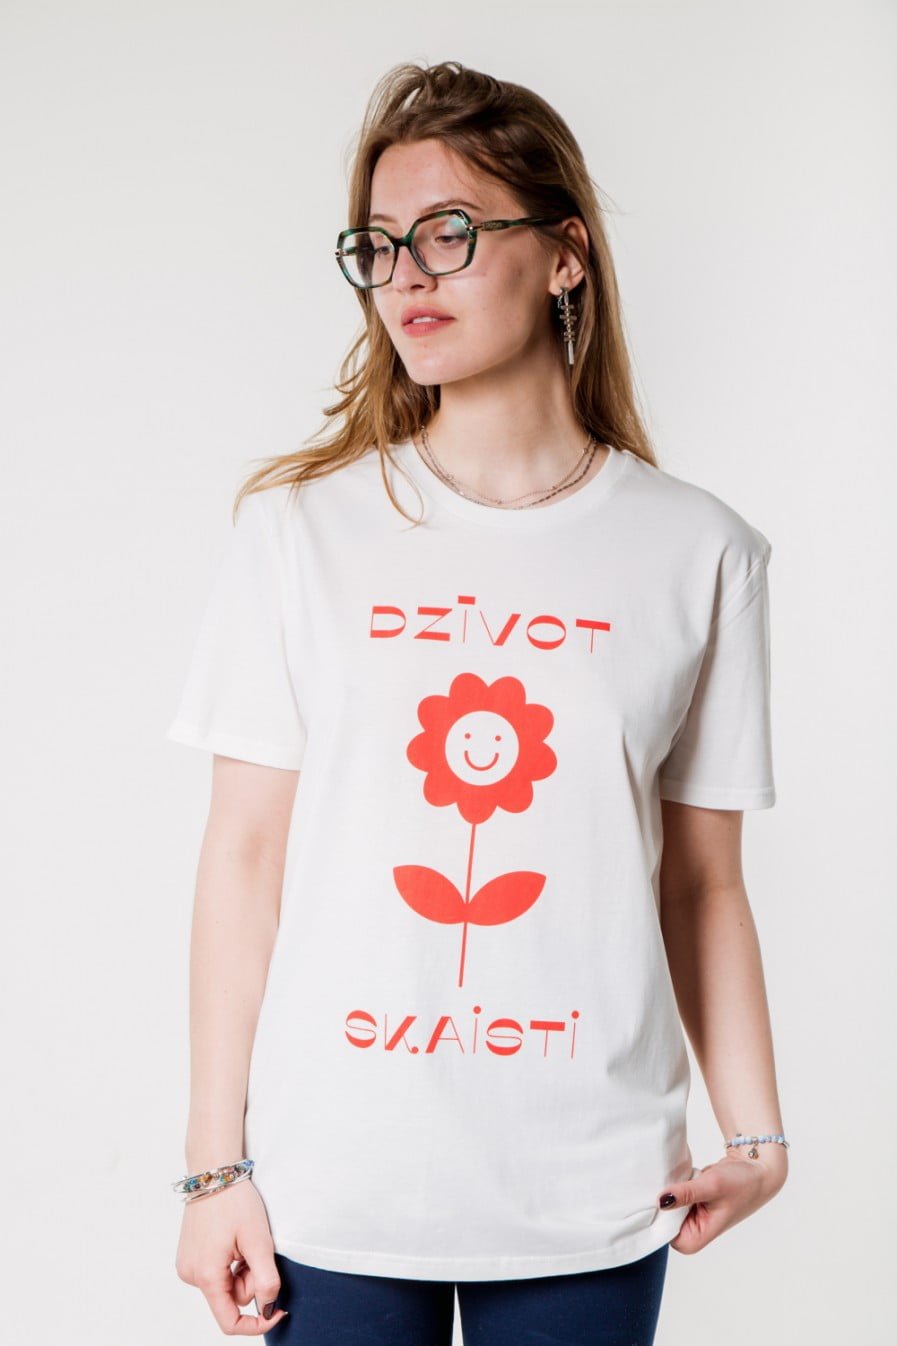 M50 SwVaira Vīksne Unisex Organic Cotton T-shirt “Dzīvot skaisti” Whiteeater | Gray